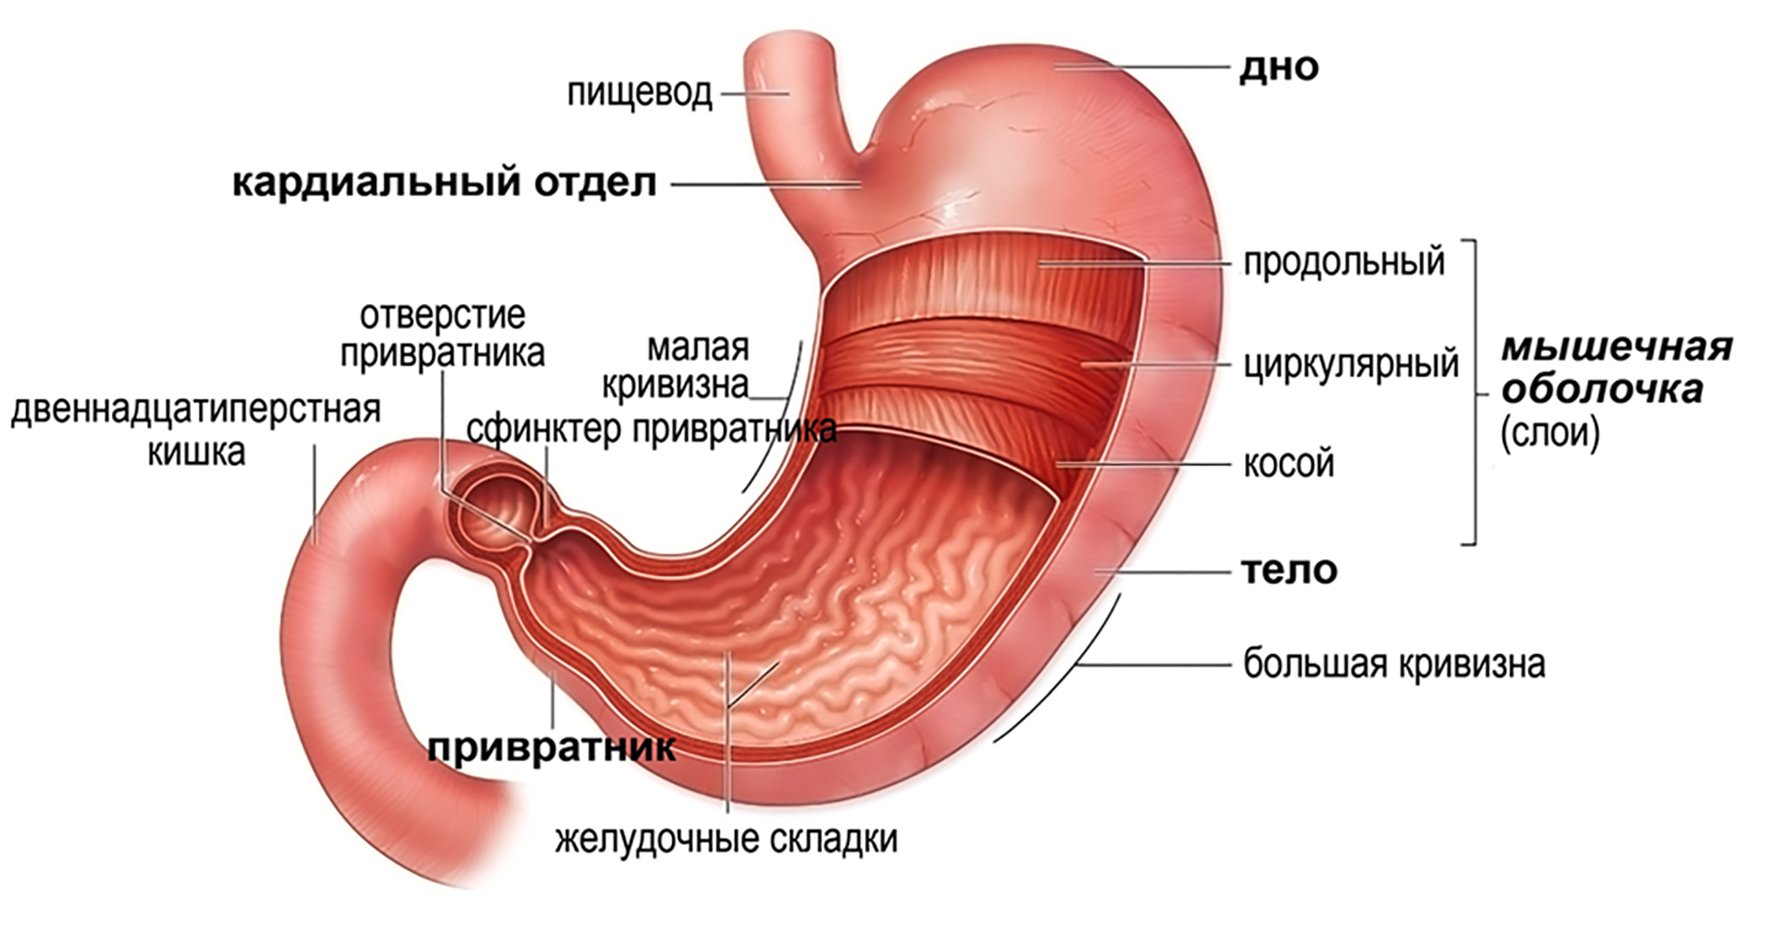 Внешнее строение желудка анатомия. Желудок строение анатомия атлас. Строение желудка человека привратник. Привратник желудка анатомия. Внутреннее строение желудка